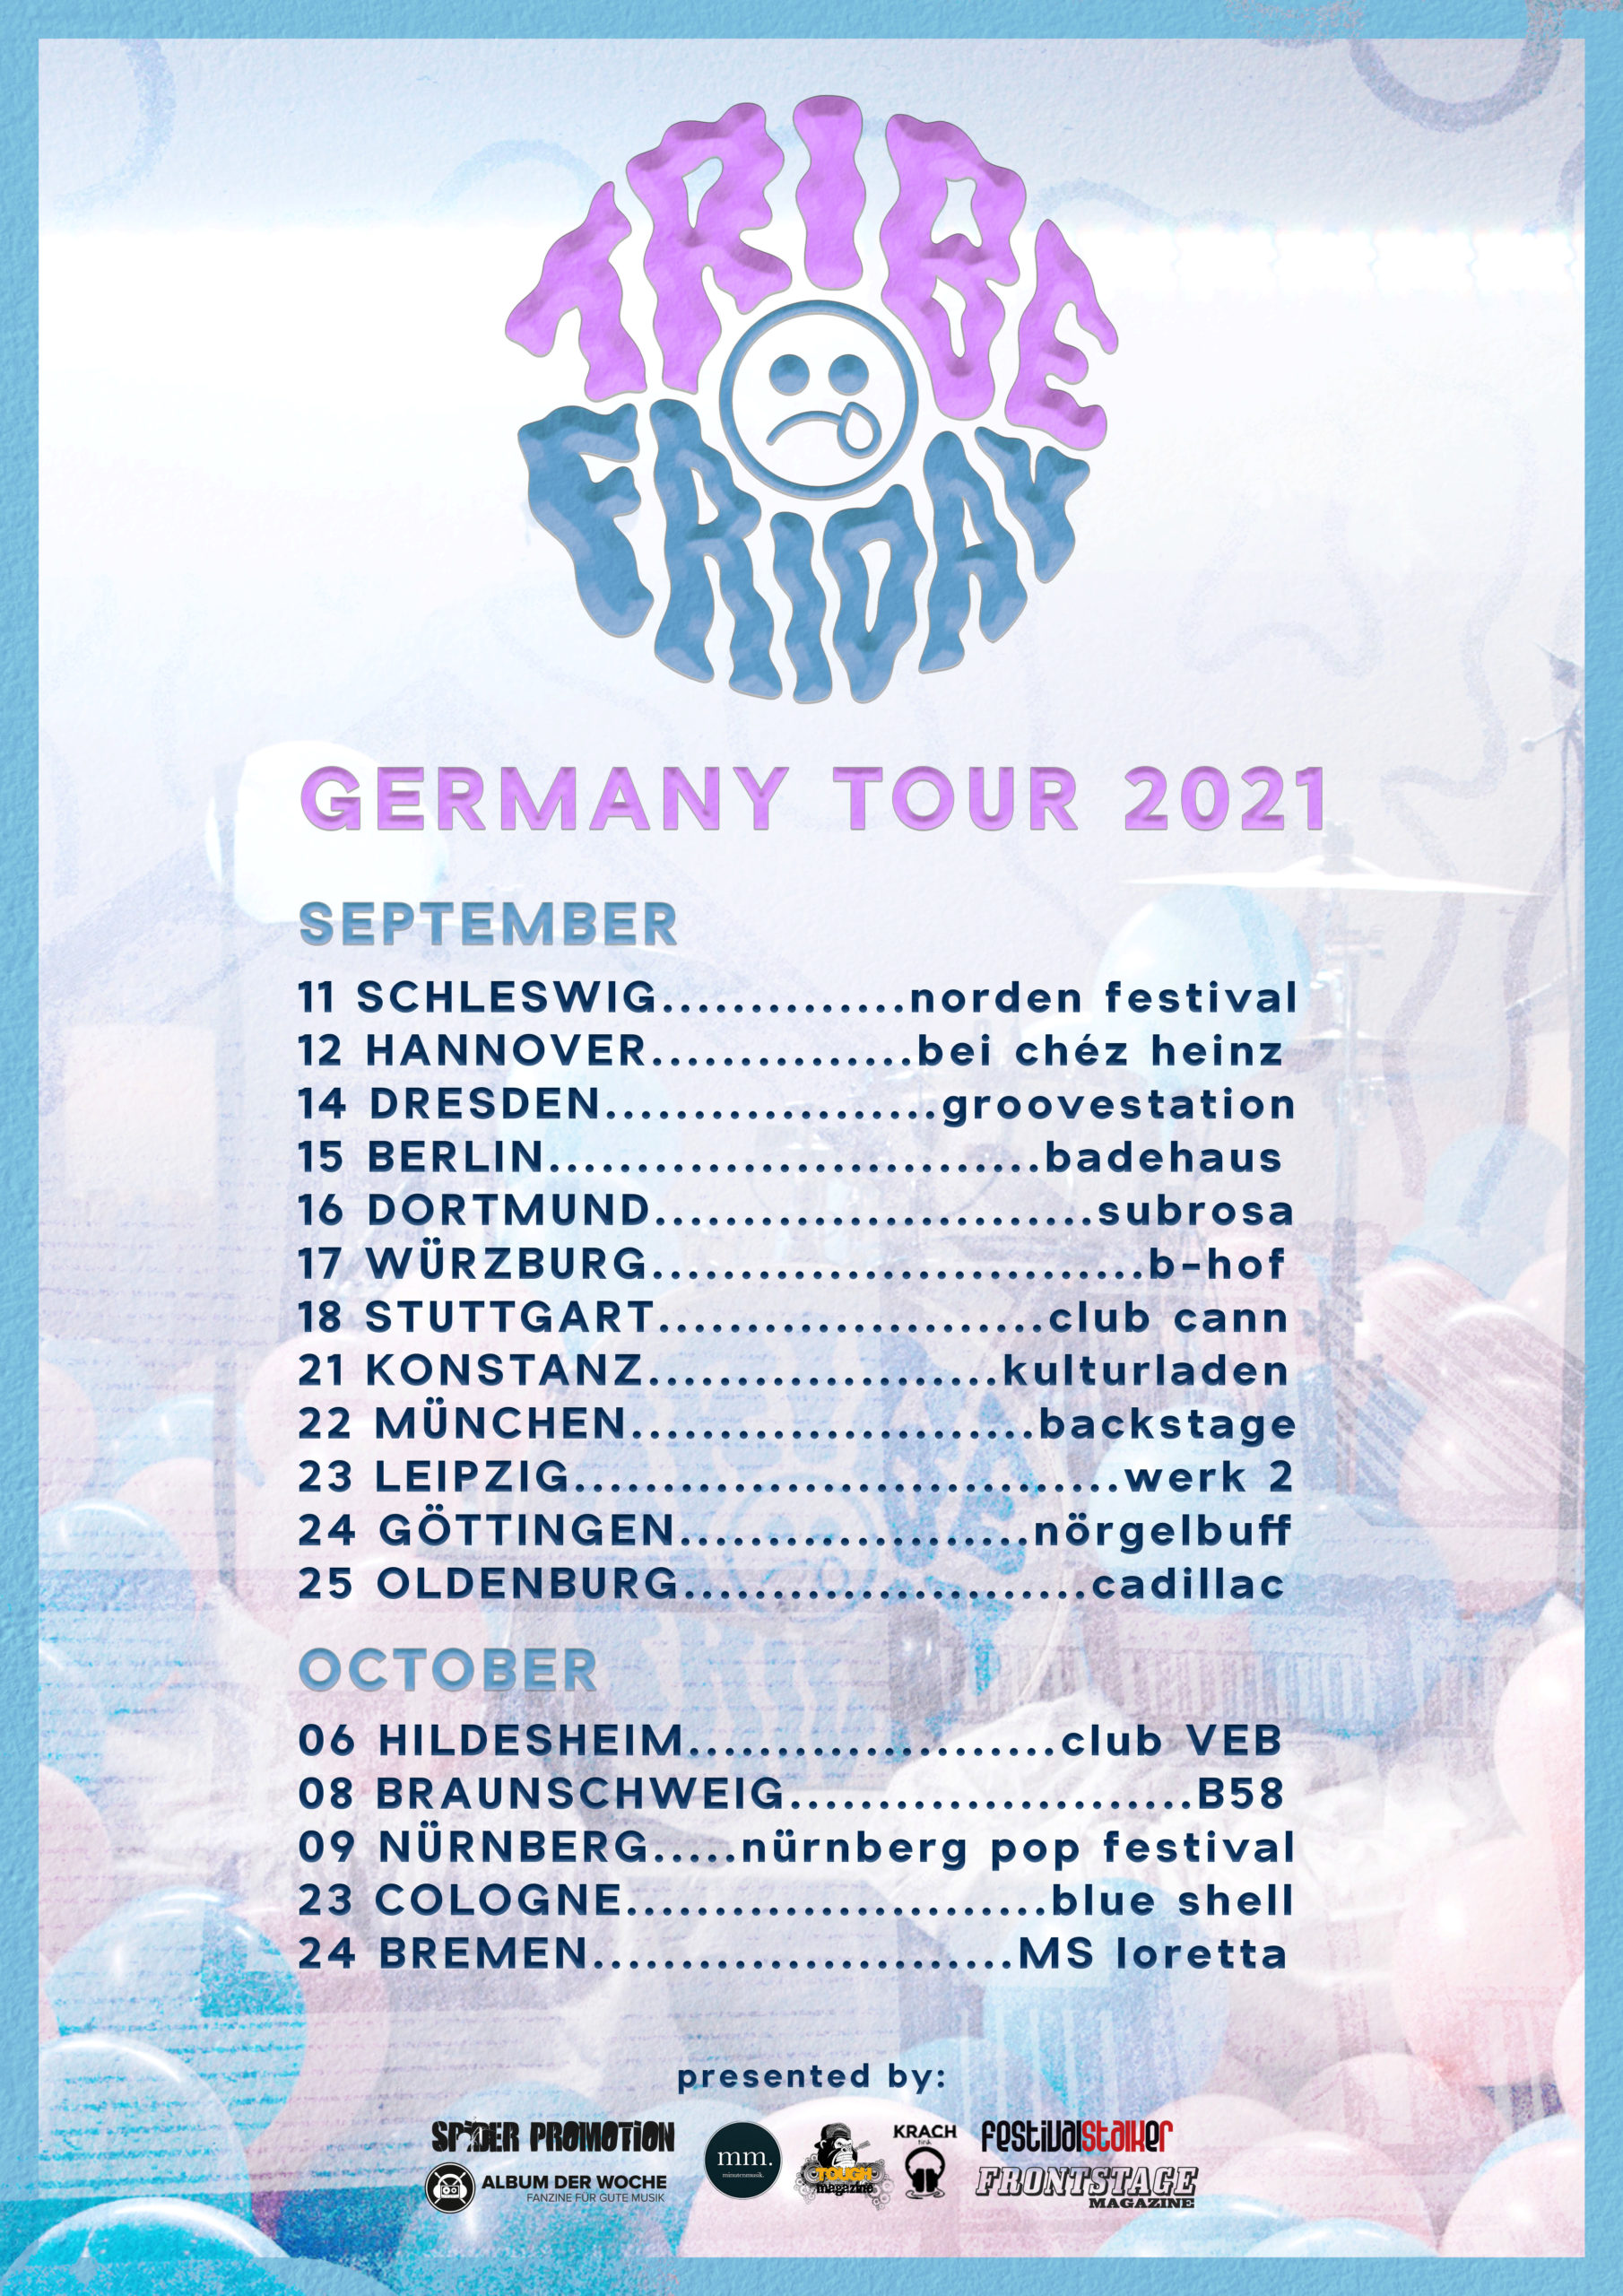 Festivalstalker präsentiert Tribe Friday Germany Tour 2021